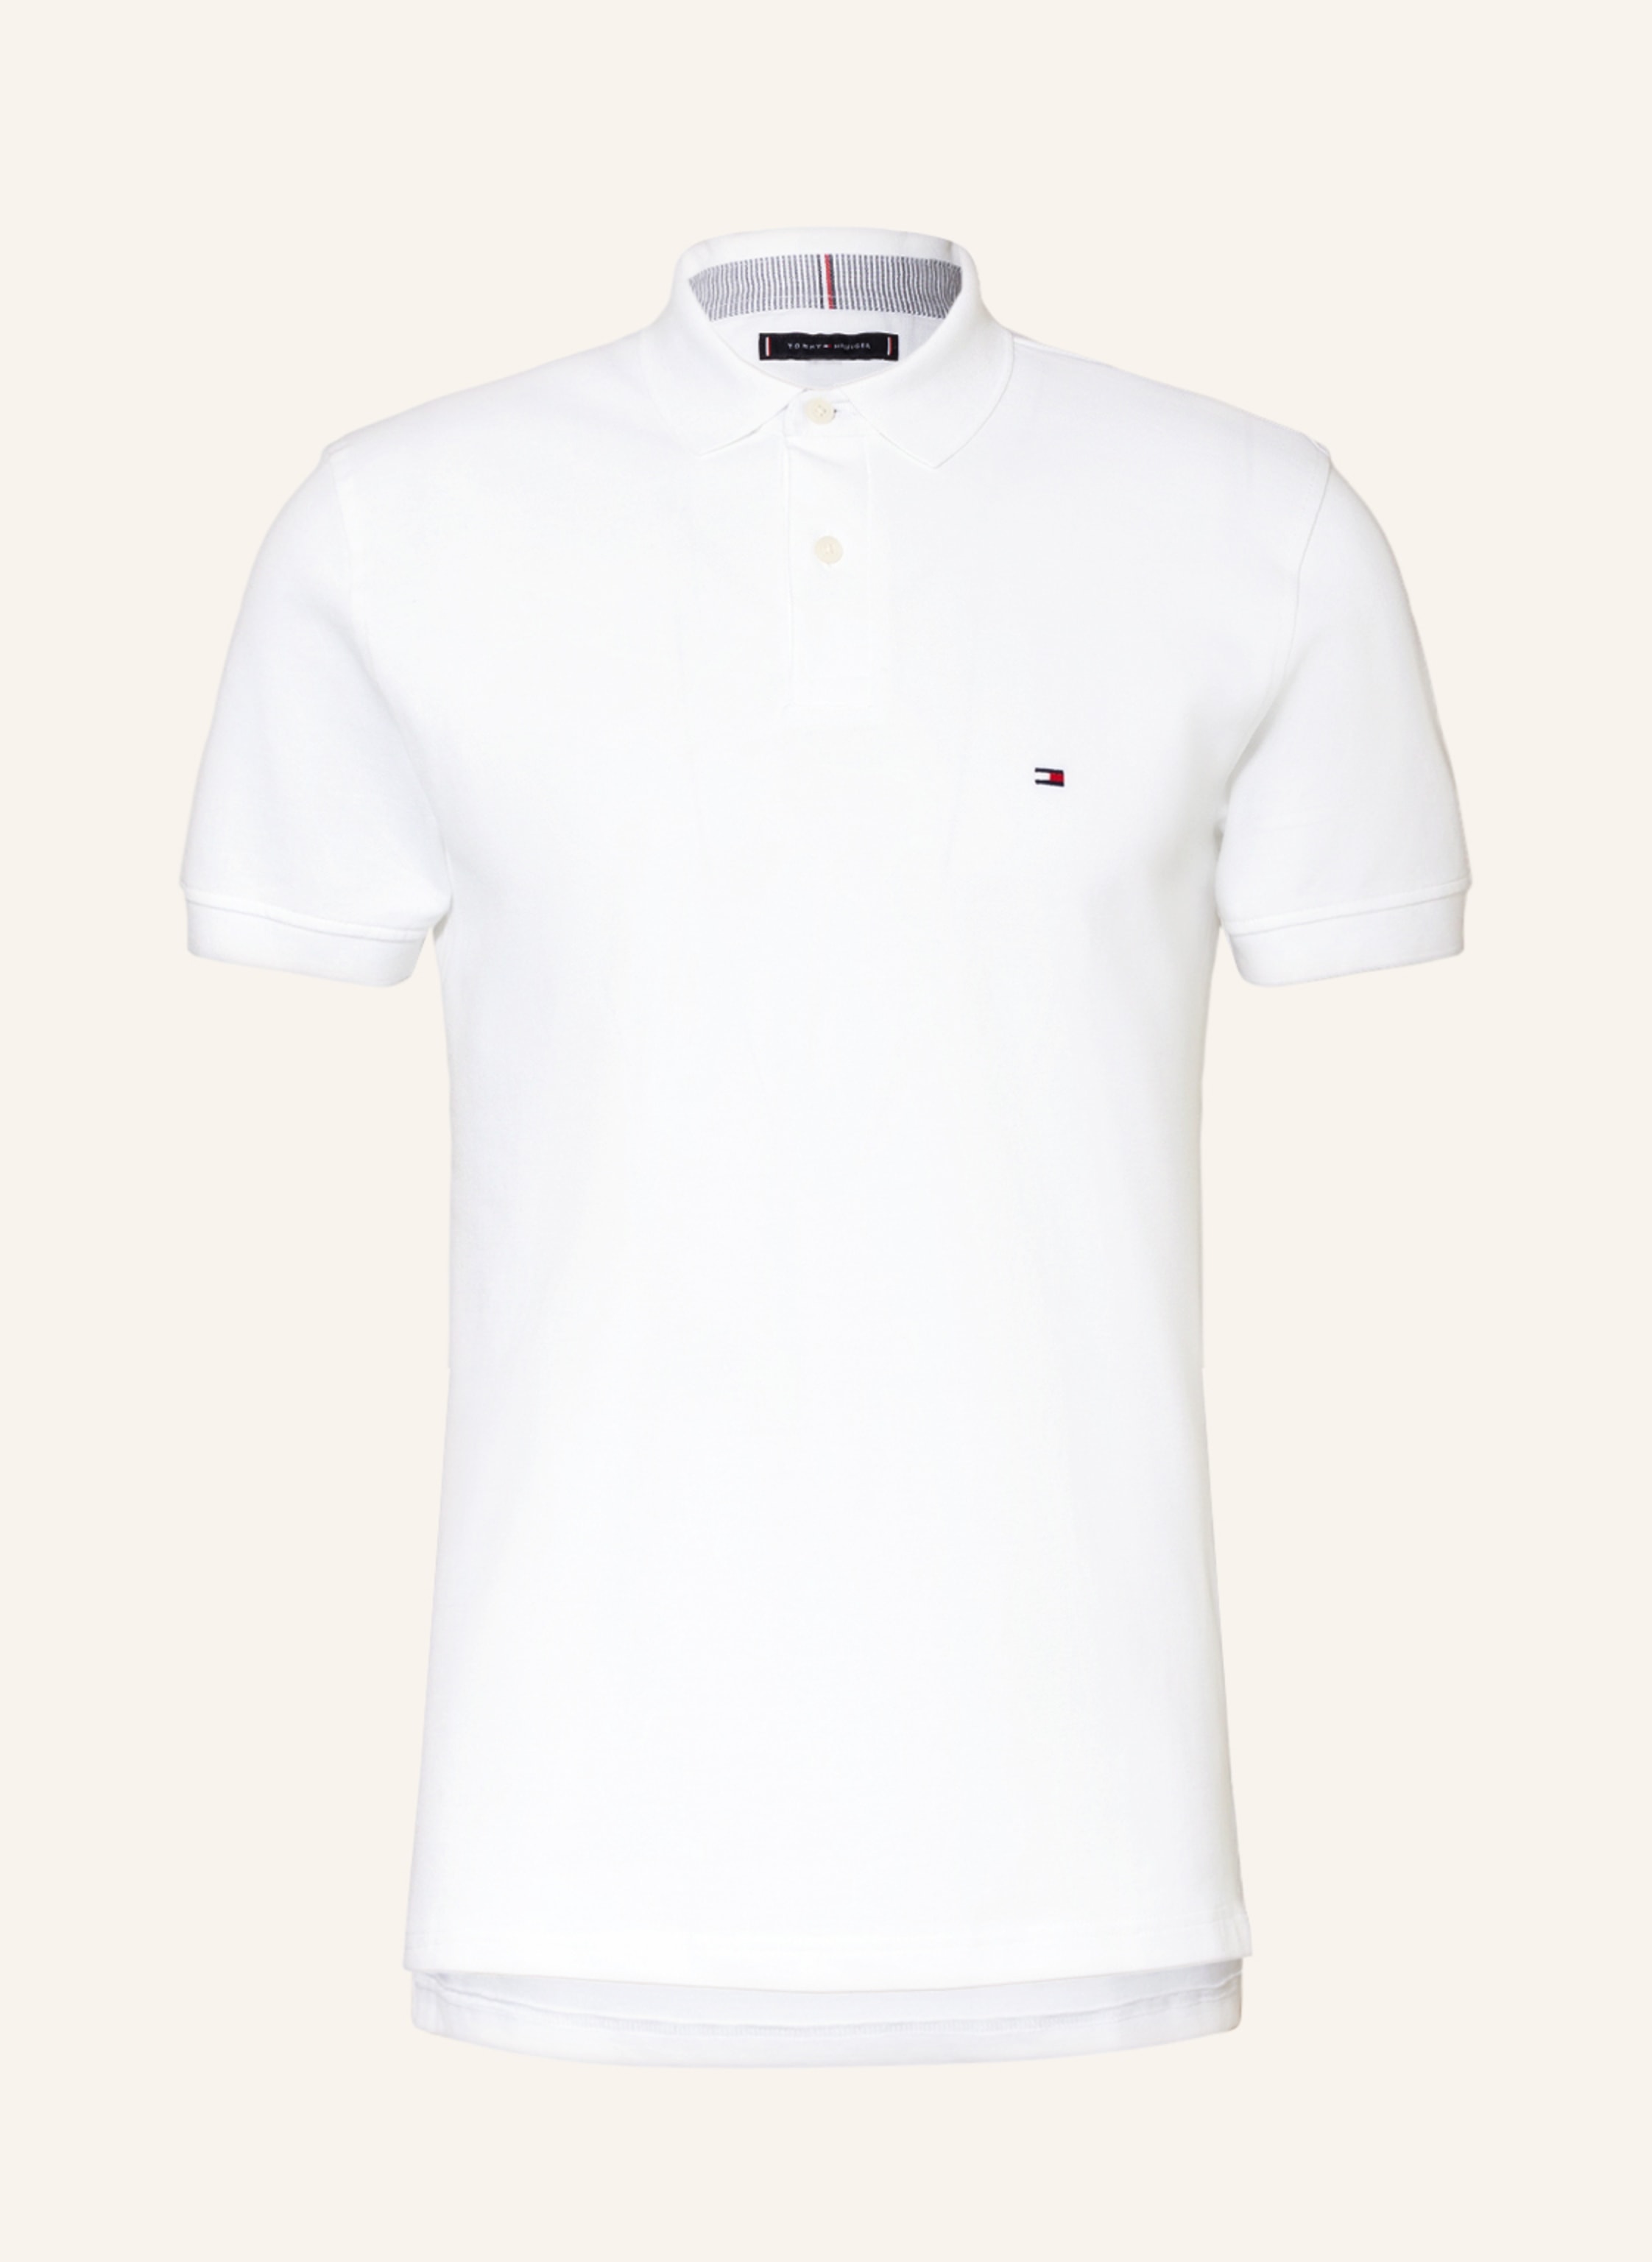 Verdensrekord Guinness Book kom over rør TOMMY HILFIGER Piqué polo shirt regular fit in white